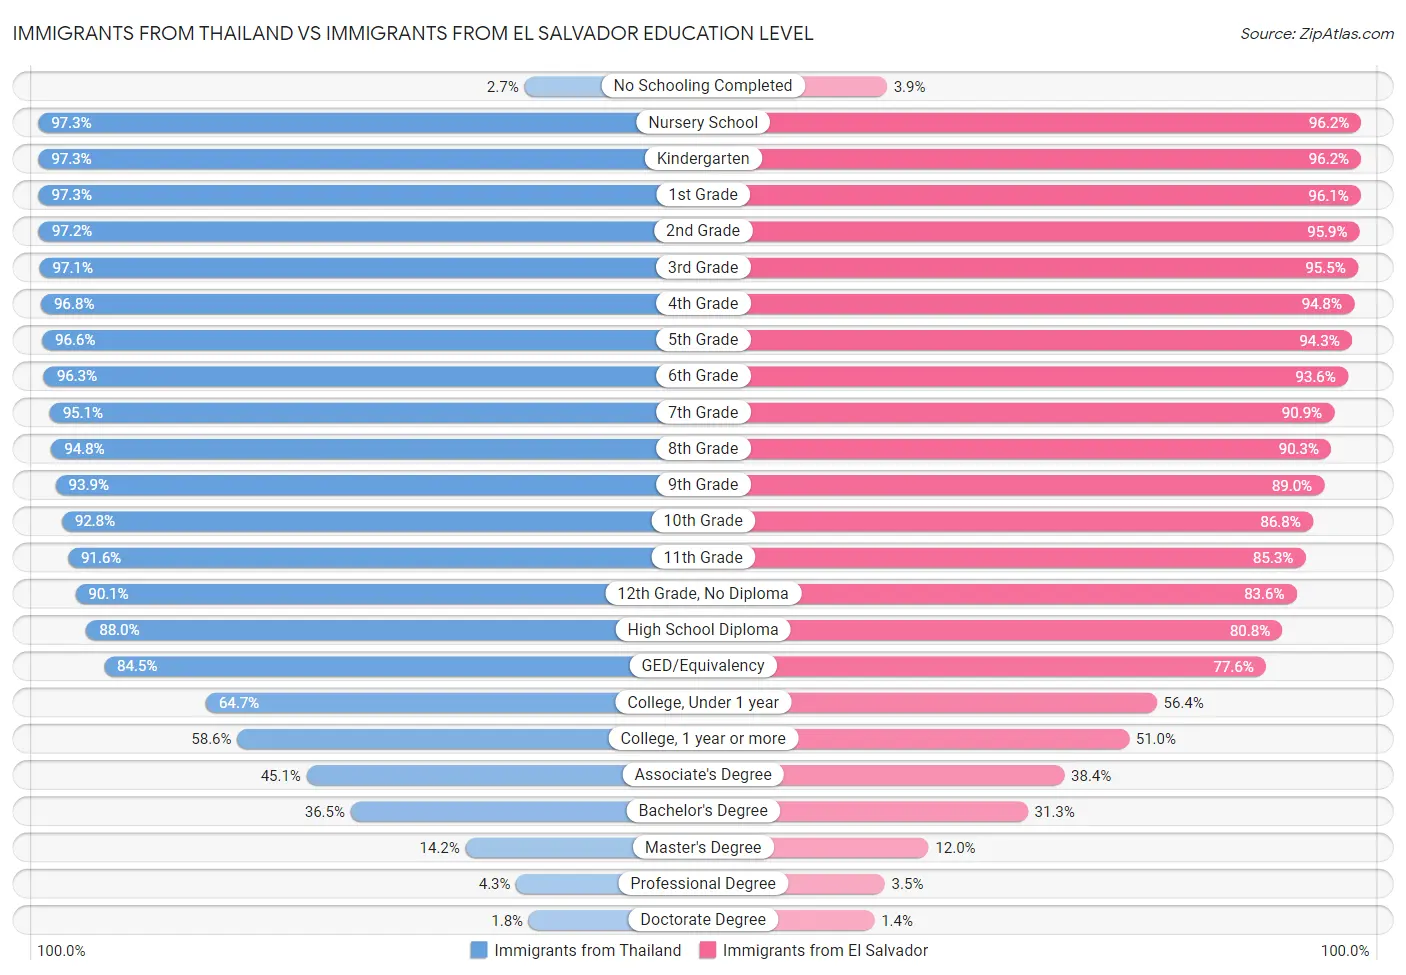 Immigrants from Thailand vs Immigrants from El Salvador Education Level